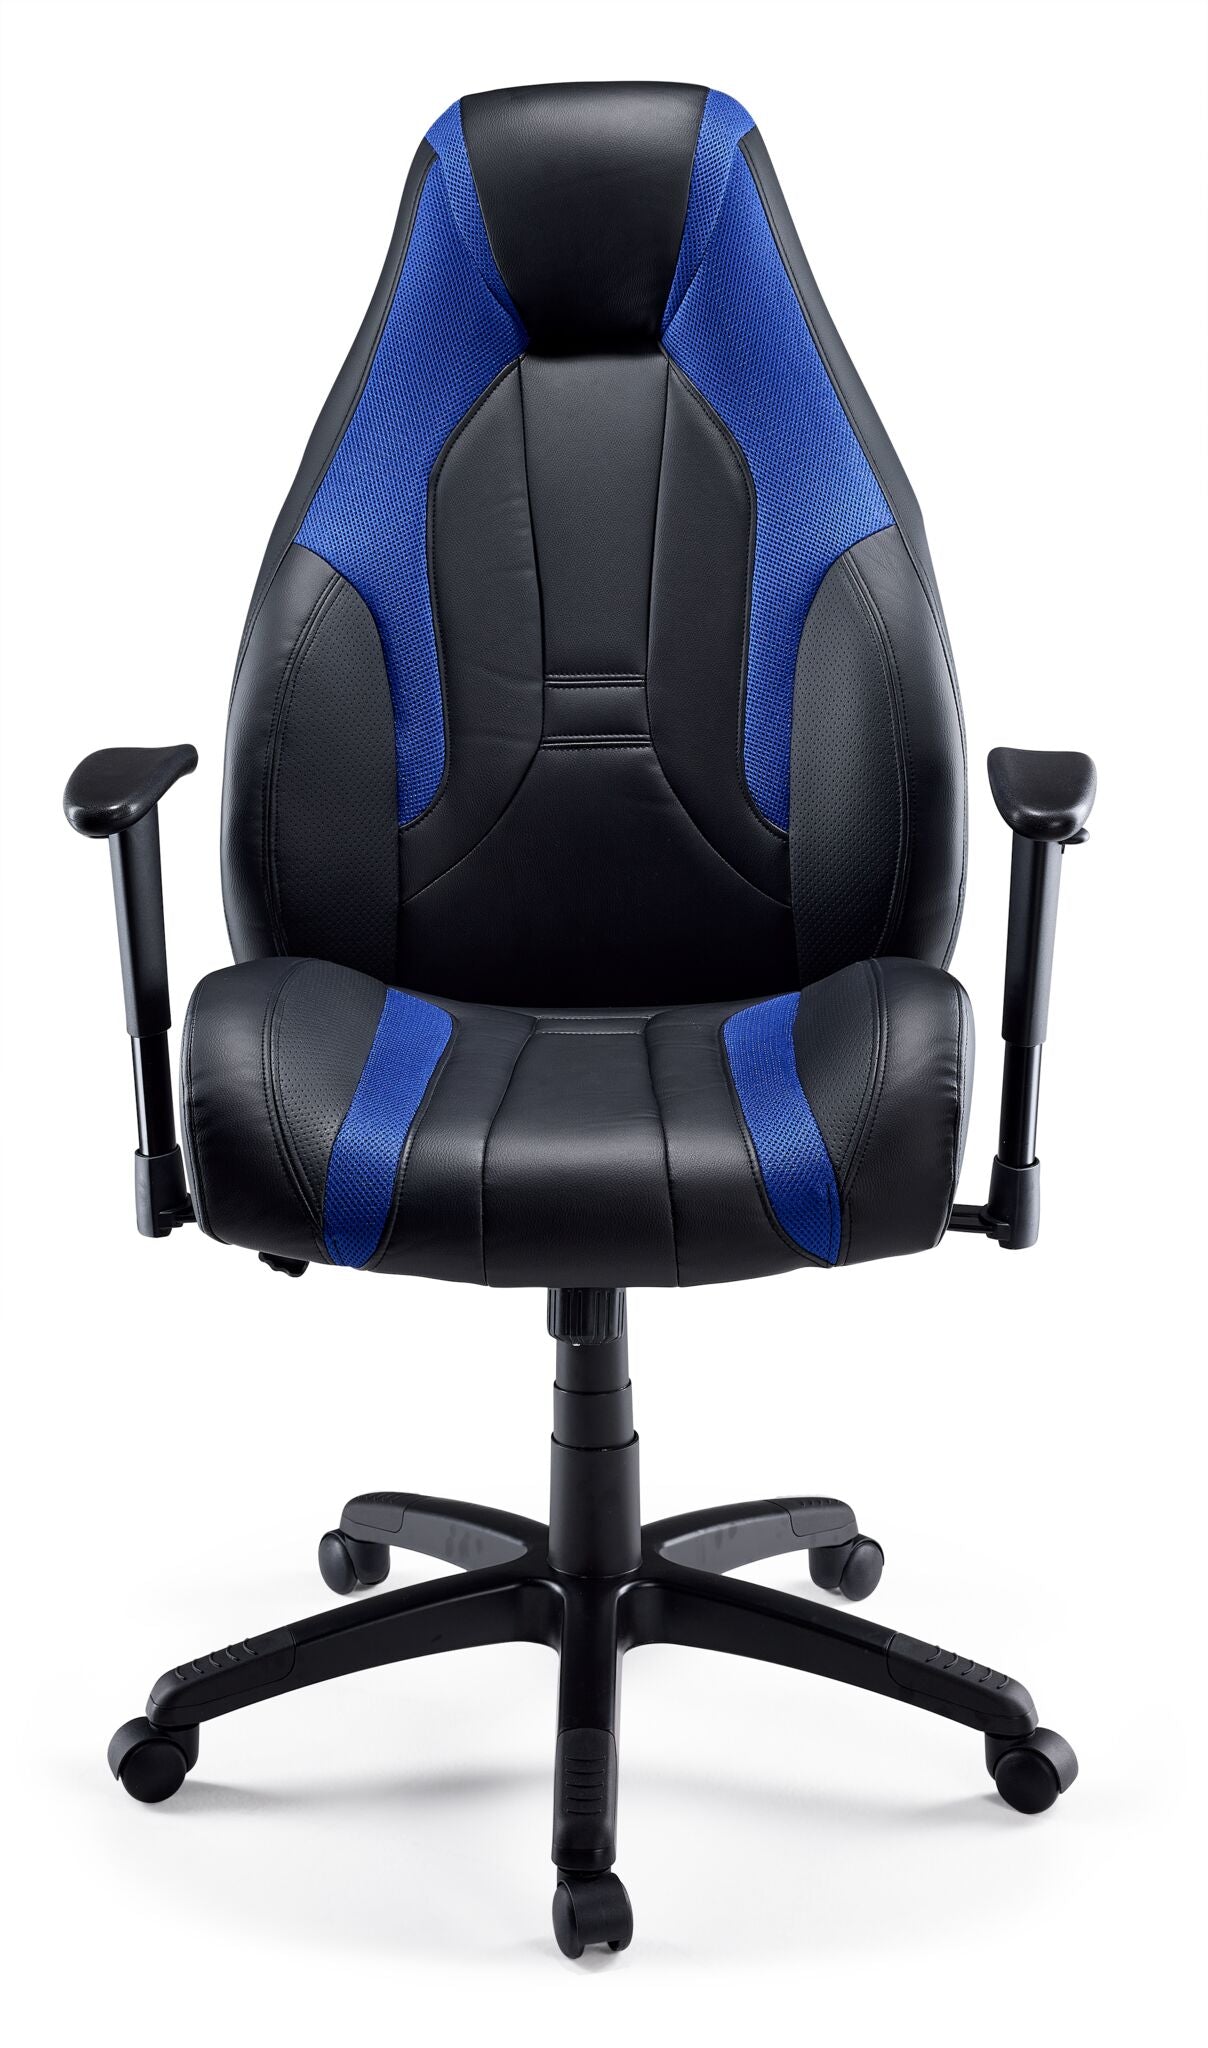 Zane Office Chair - Black, Blue